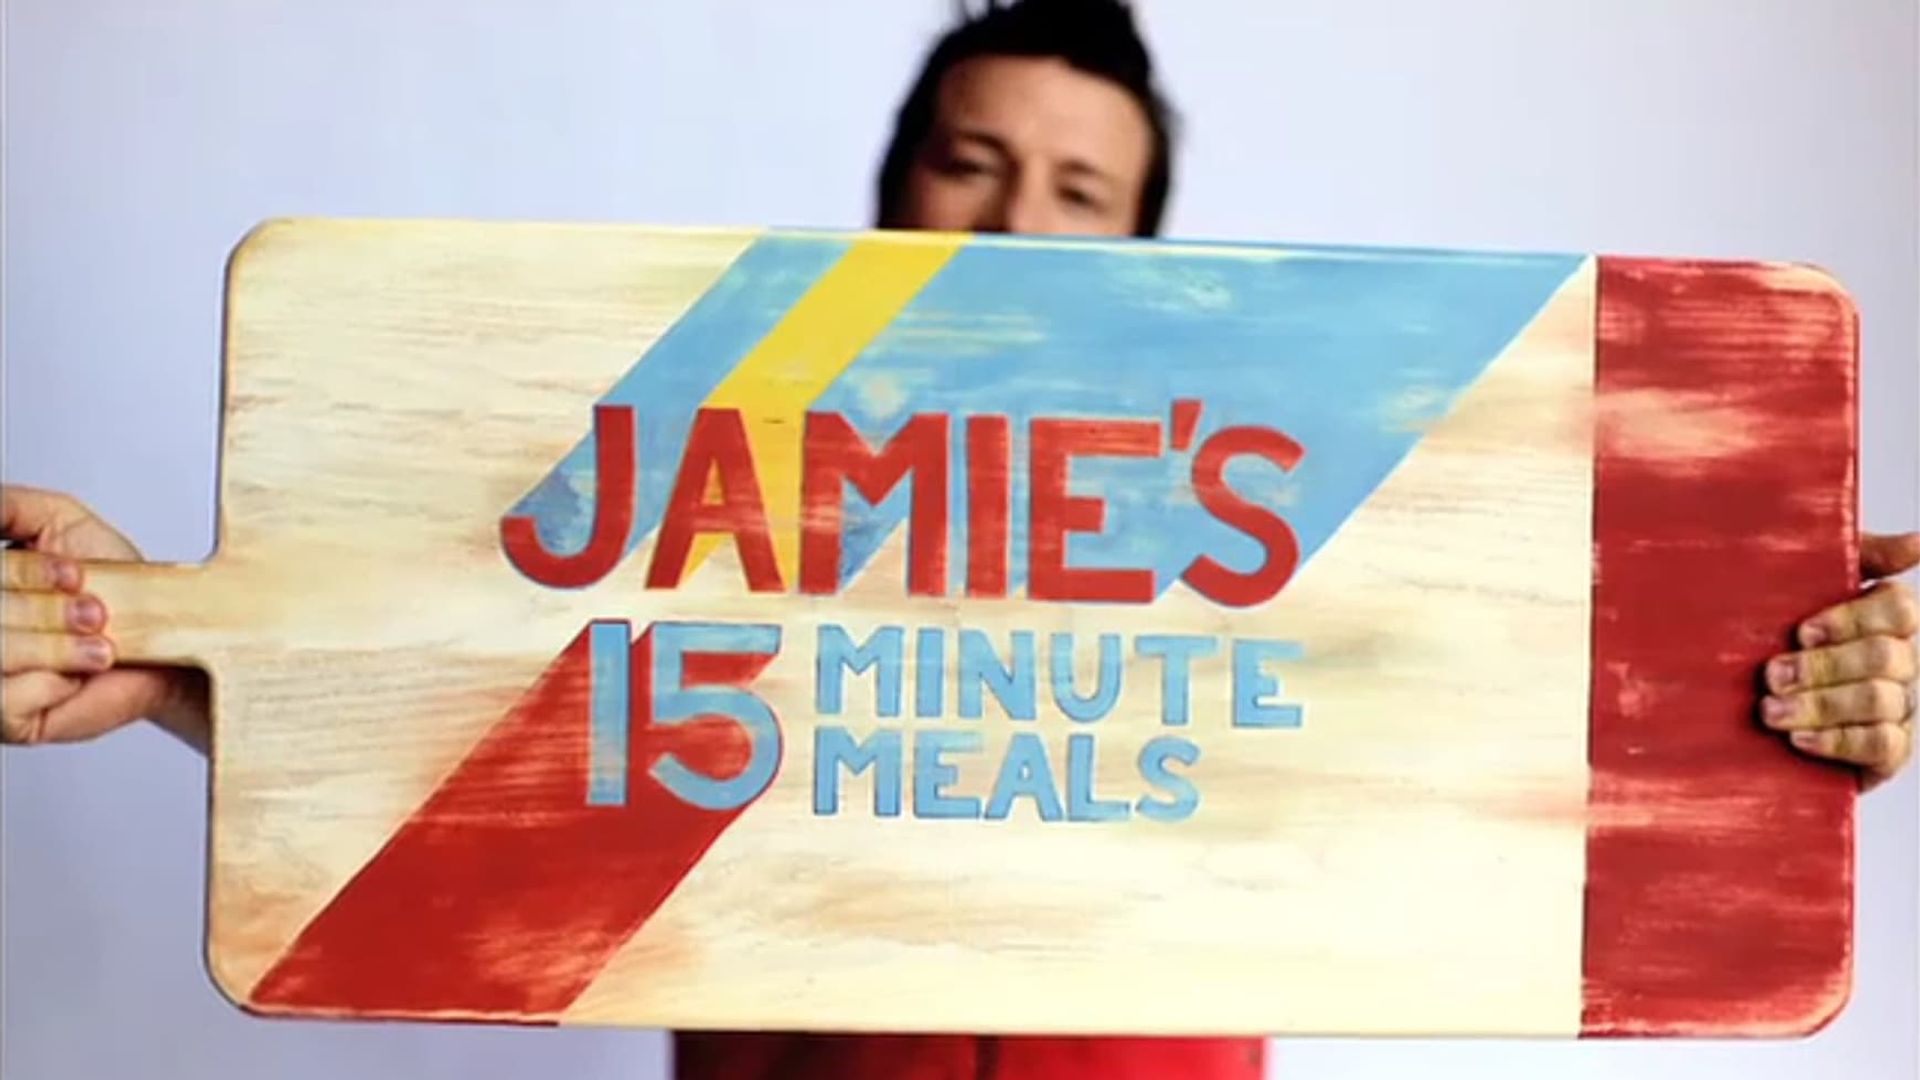 Jamie's 15-Minute Meals background